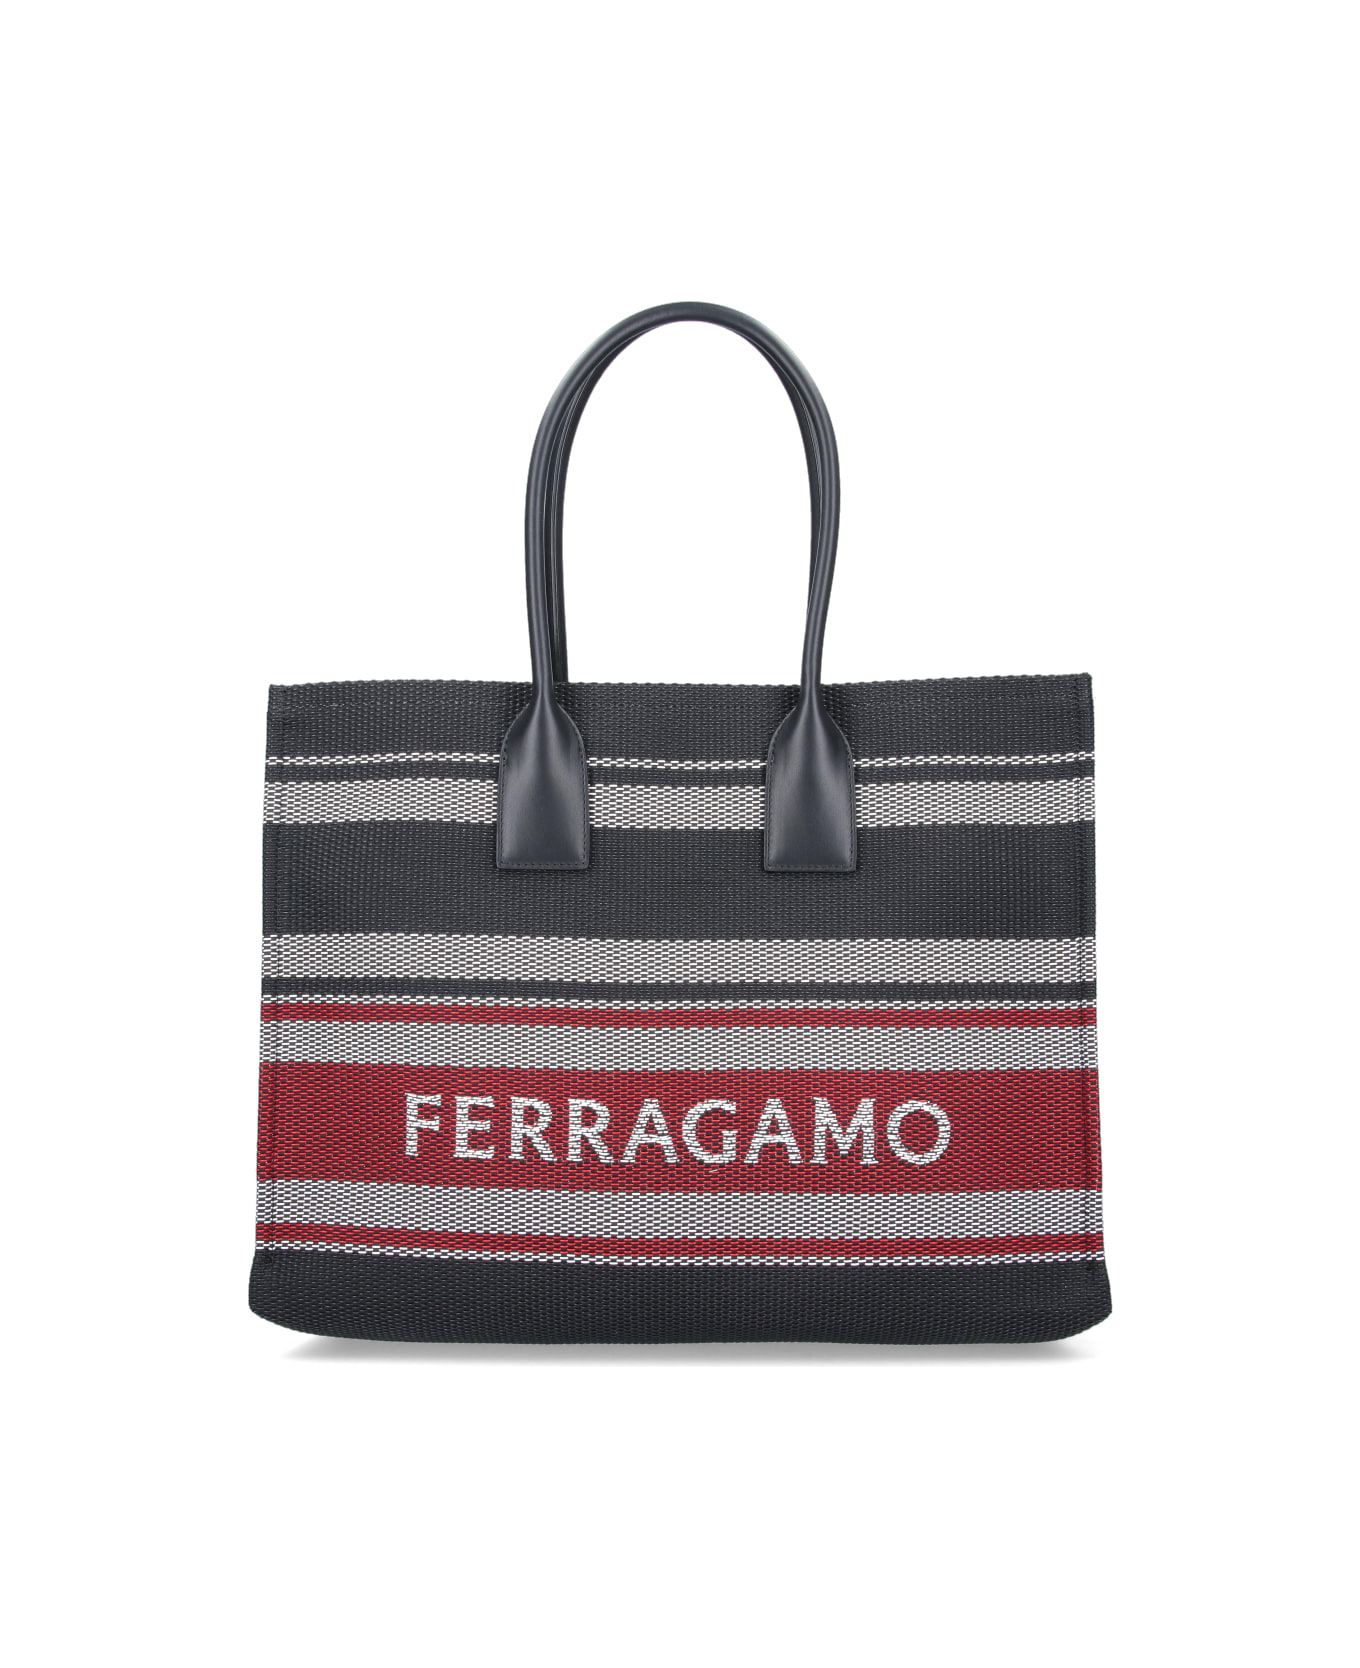 Ferragamo Logo Tote Bag - Black, red